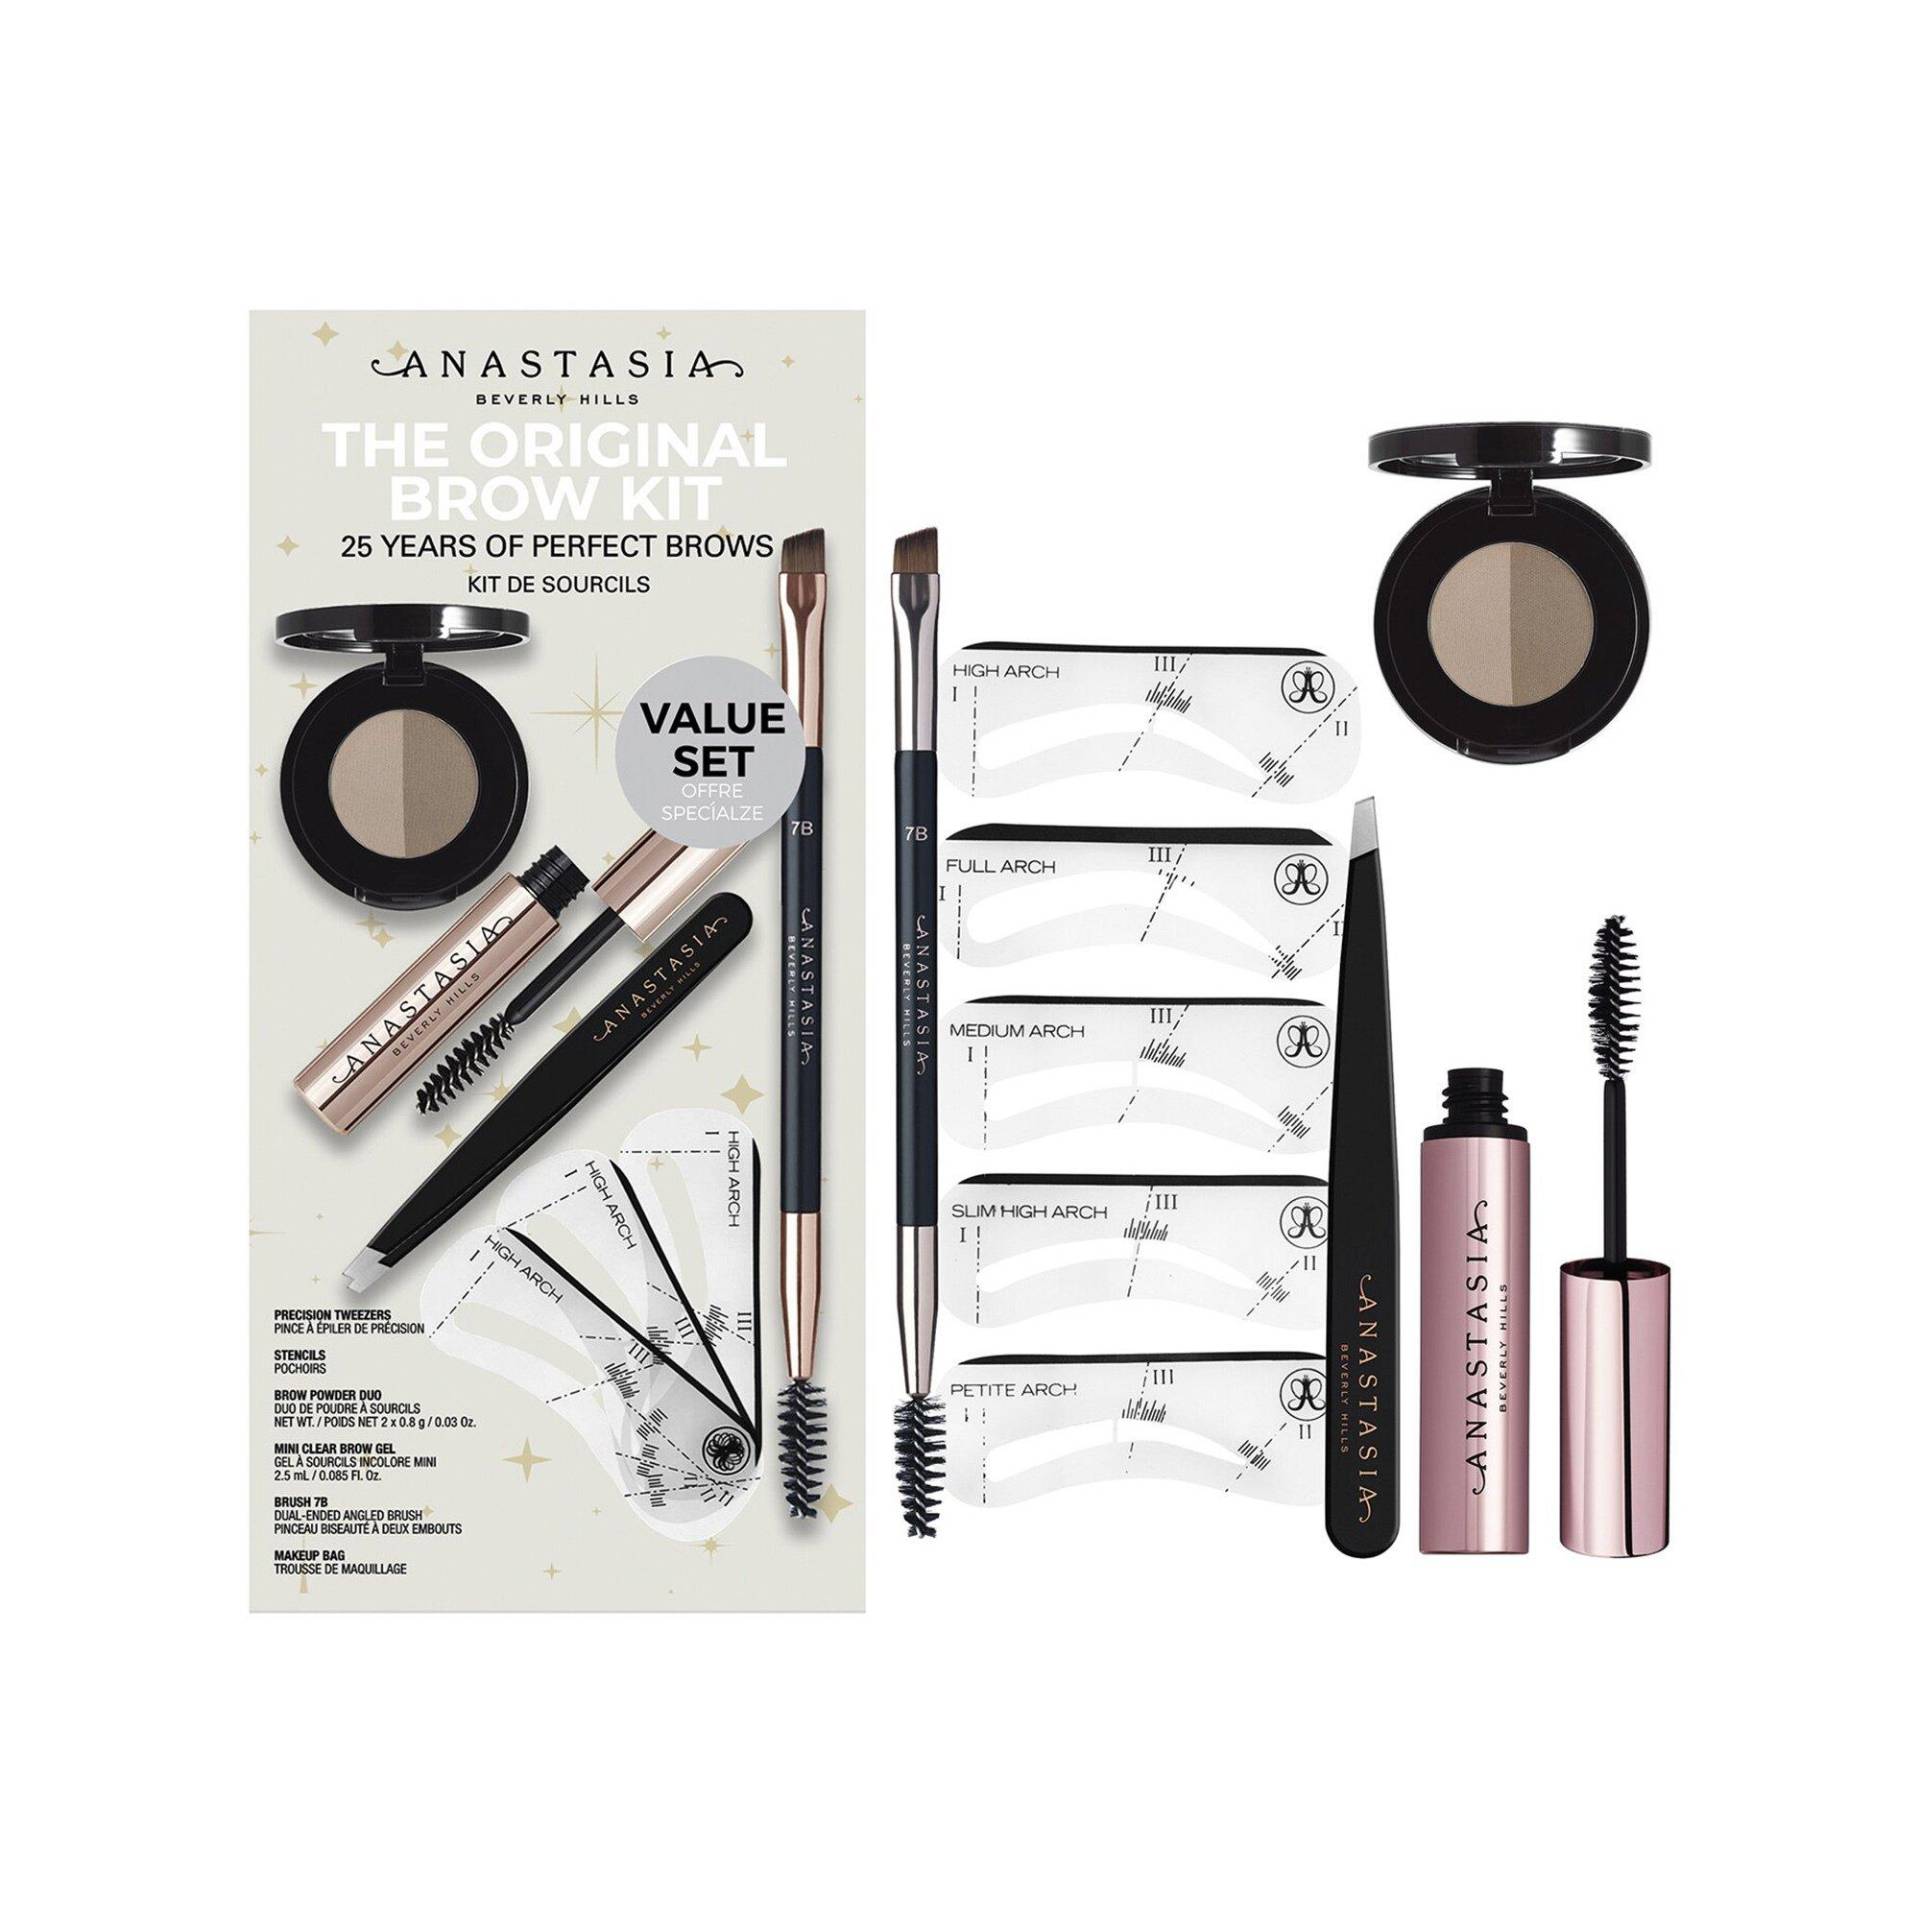 Og Brow Kit - Augenbrauen-make-up-set Damen TAUPE Set von Anastasia Beverly Hills